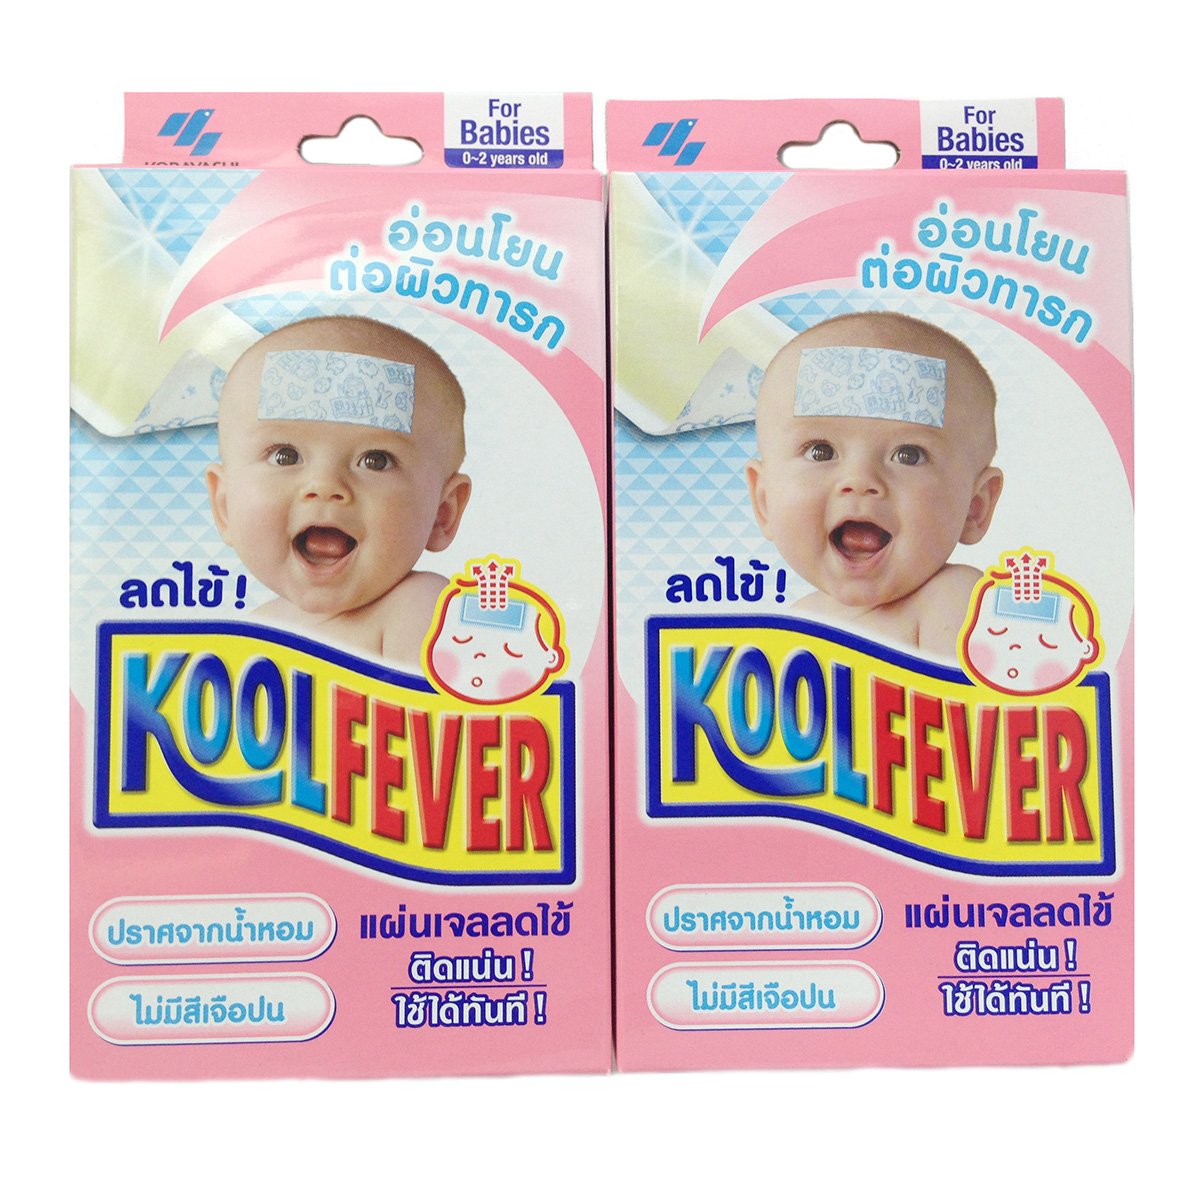 Kobayashi Kool Fever Gel Sheet Cooling Patch For Babies 0-2 Years (2 BOXES)